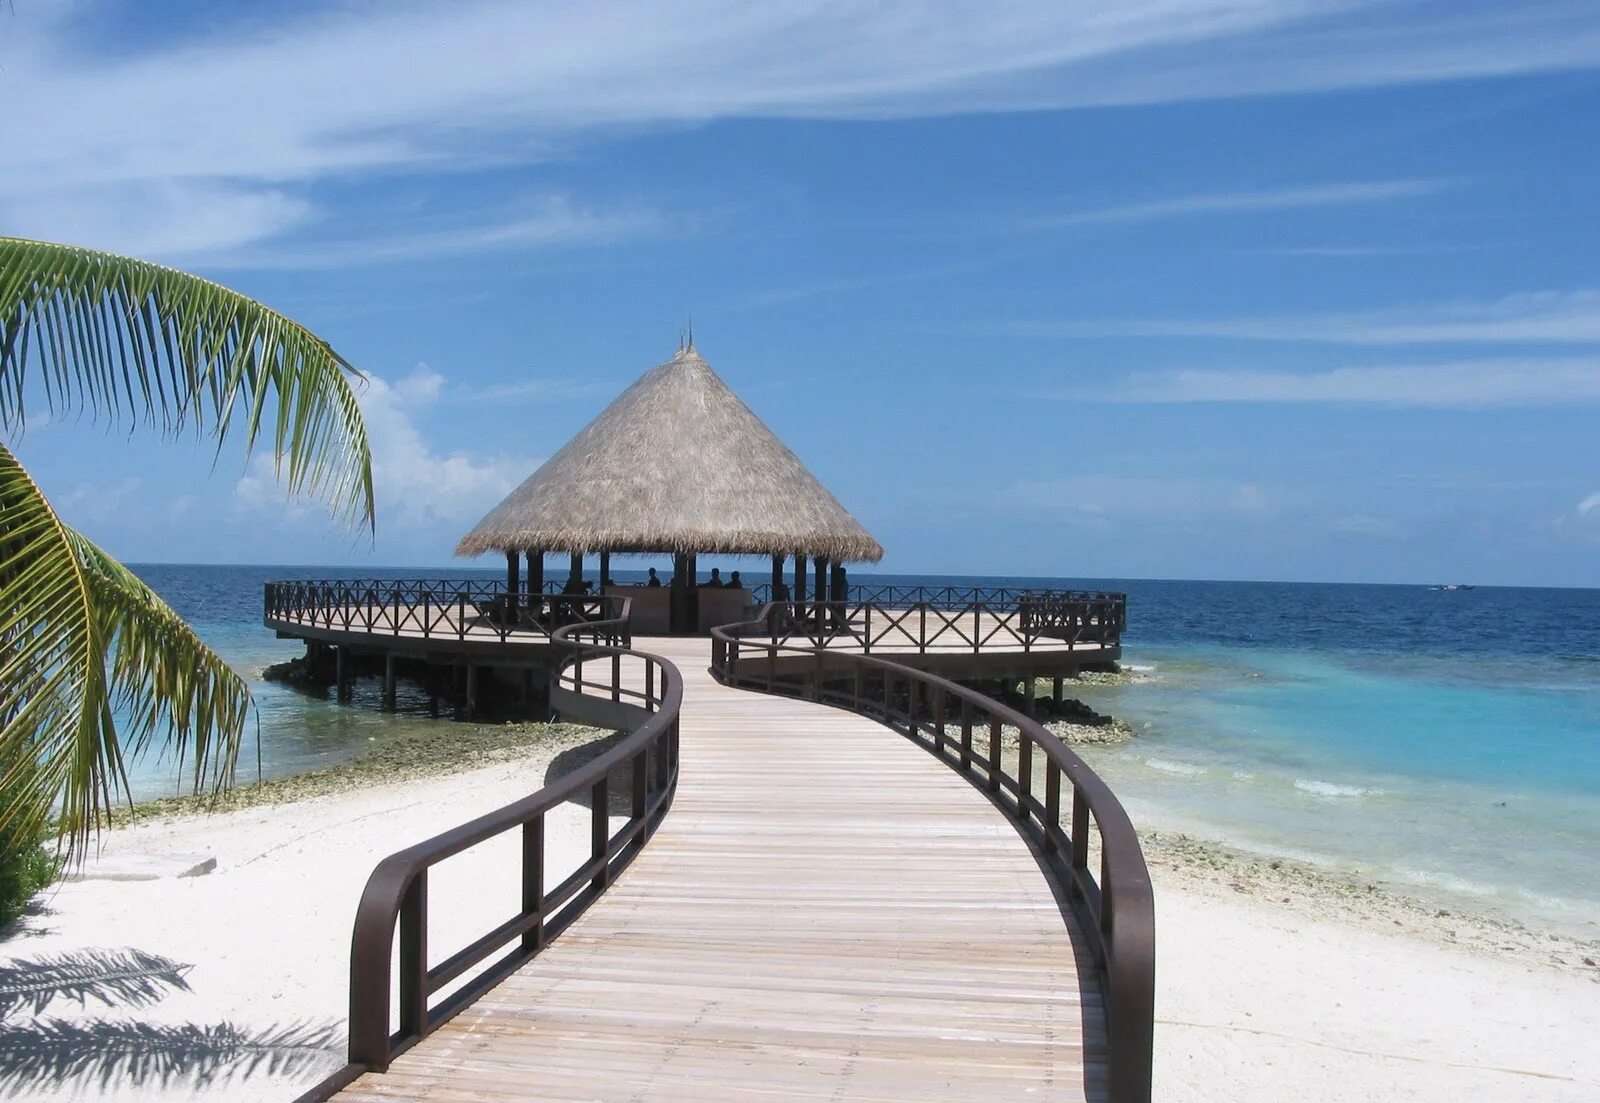 Bandos Maldives 4. Мальдивы Bandos. Bandos Island Resort 4*. Bandos Island Resort & Spa. Bandos island 4